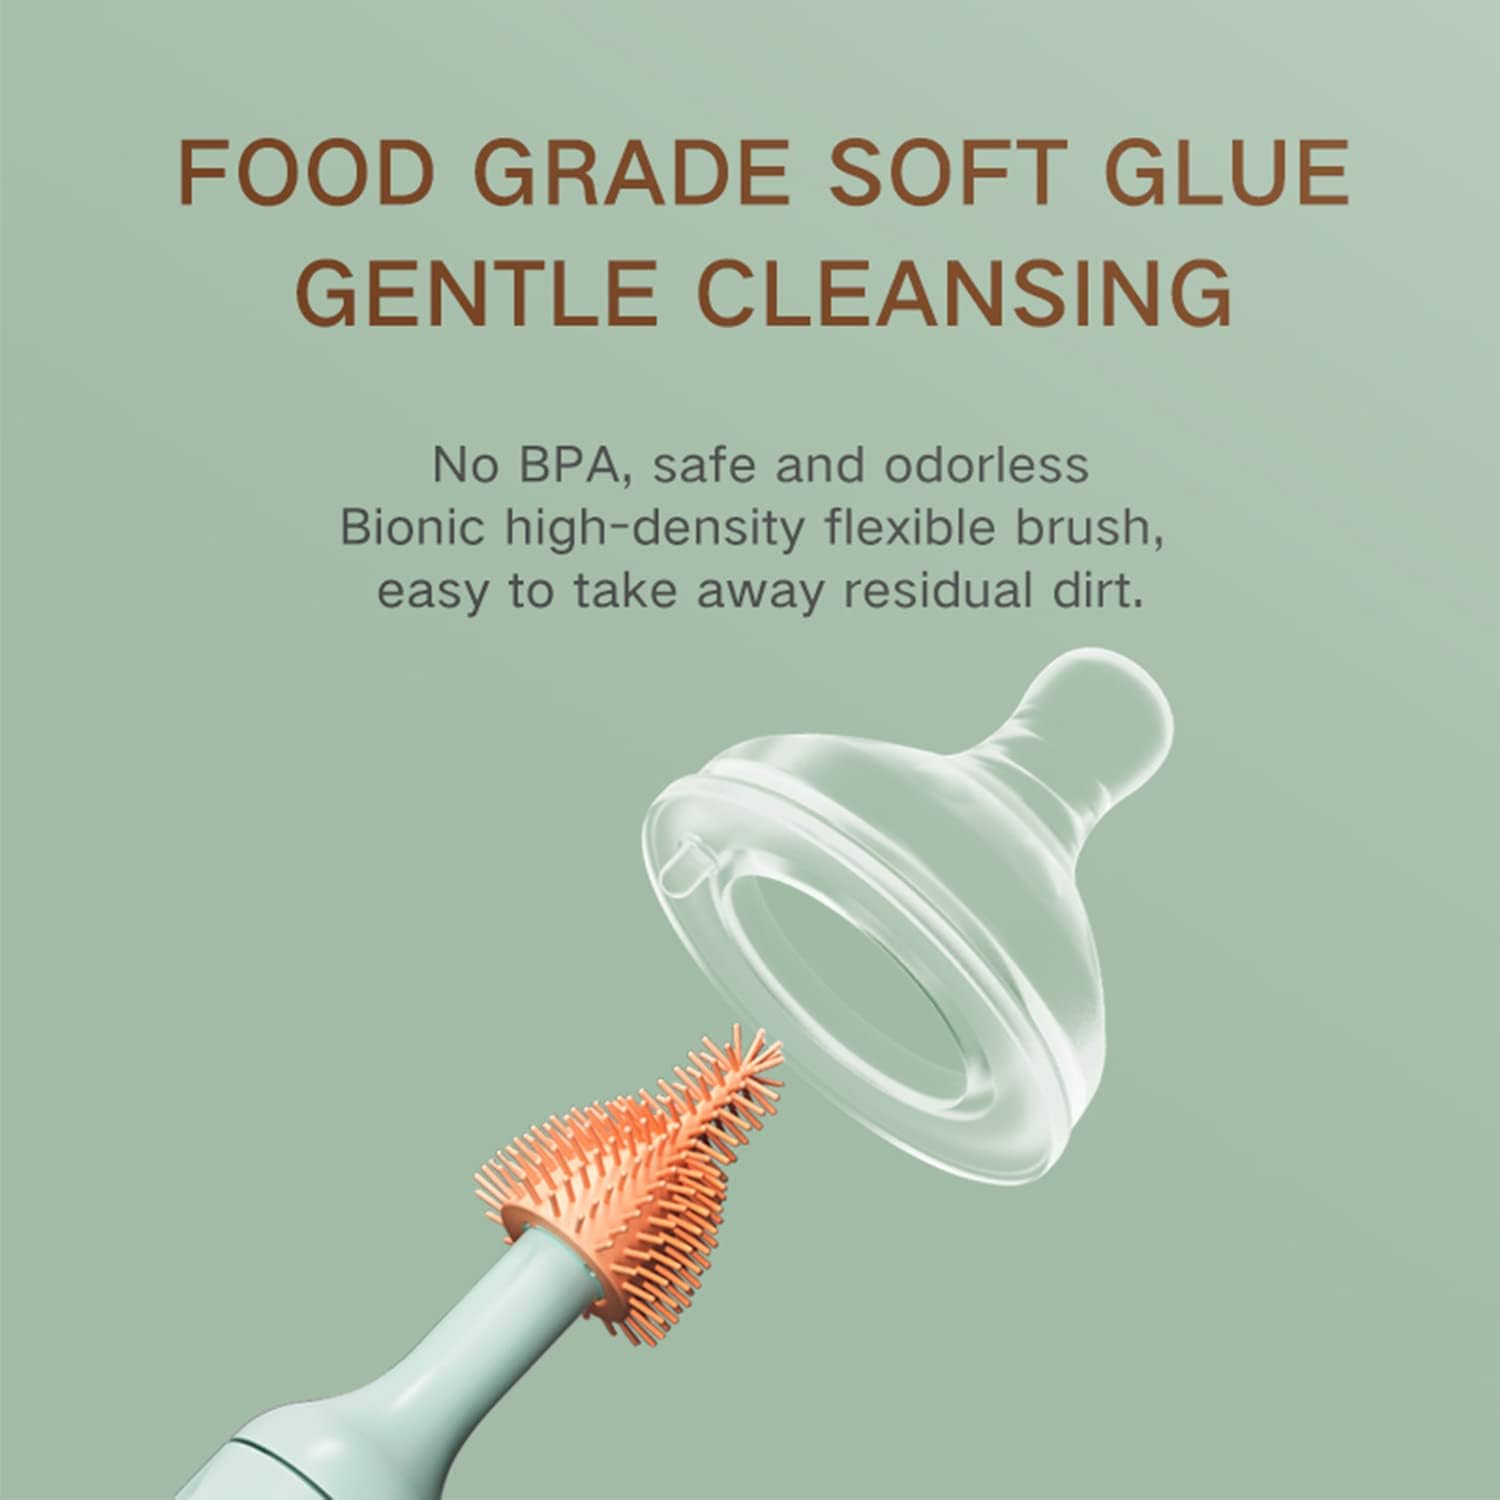 Smart Design Bottle Brush - Comfort Non-Slip Grip Handles - Non-Scratch - Odor Resistant - Dishwasher Safe - for Cleaning Water Bottles, Baby